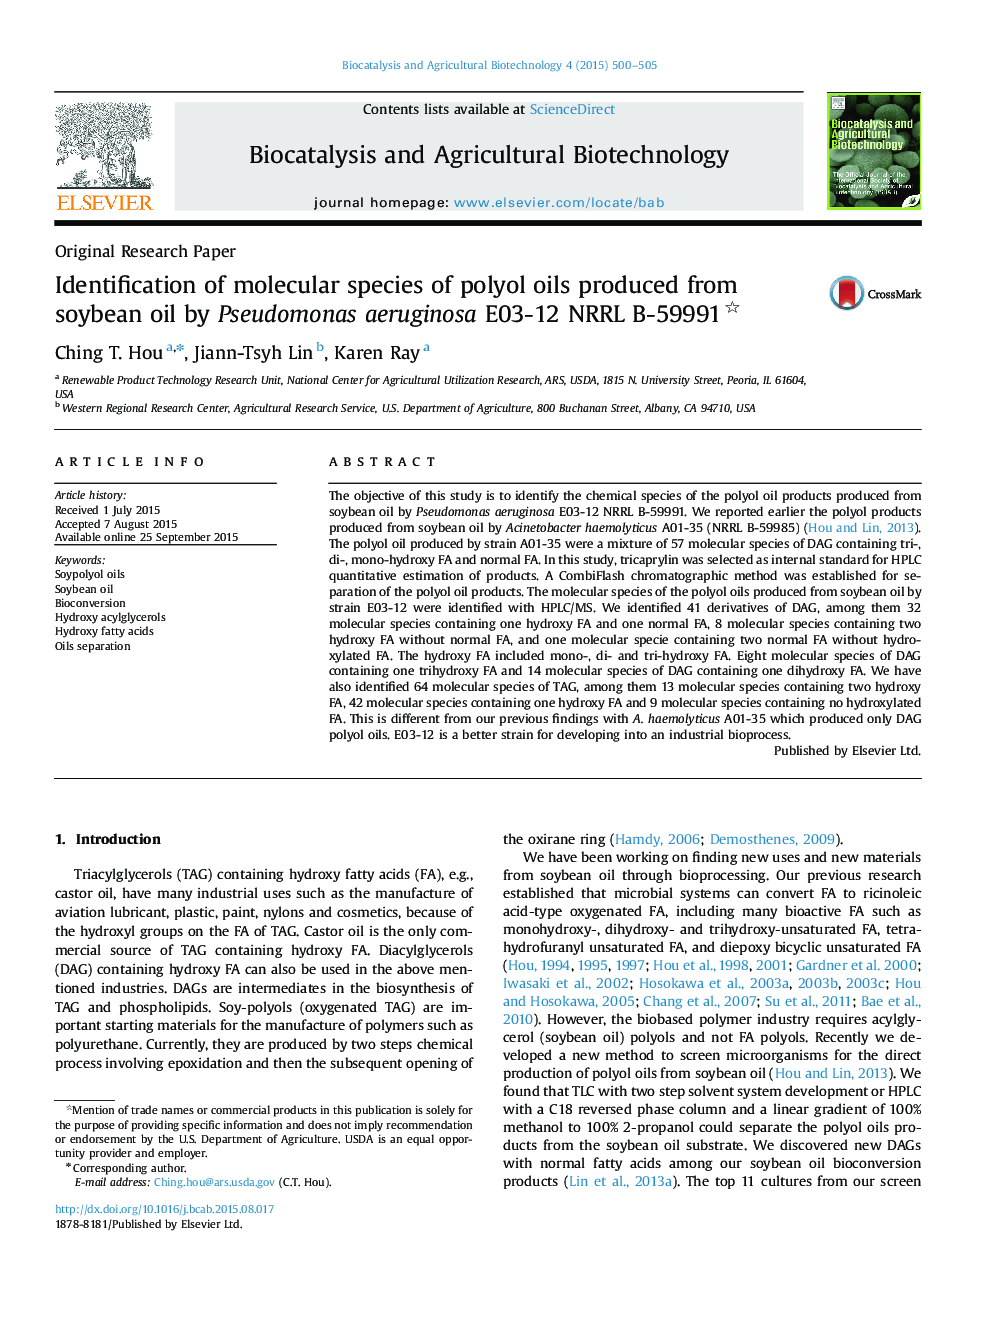 Identification of molecular species of polyol oils produced from soybean oil by Pseudomonas aeruginosa E03-12 NRRL B-59991 